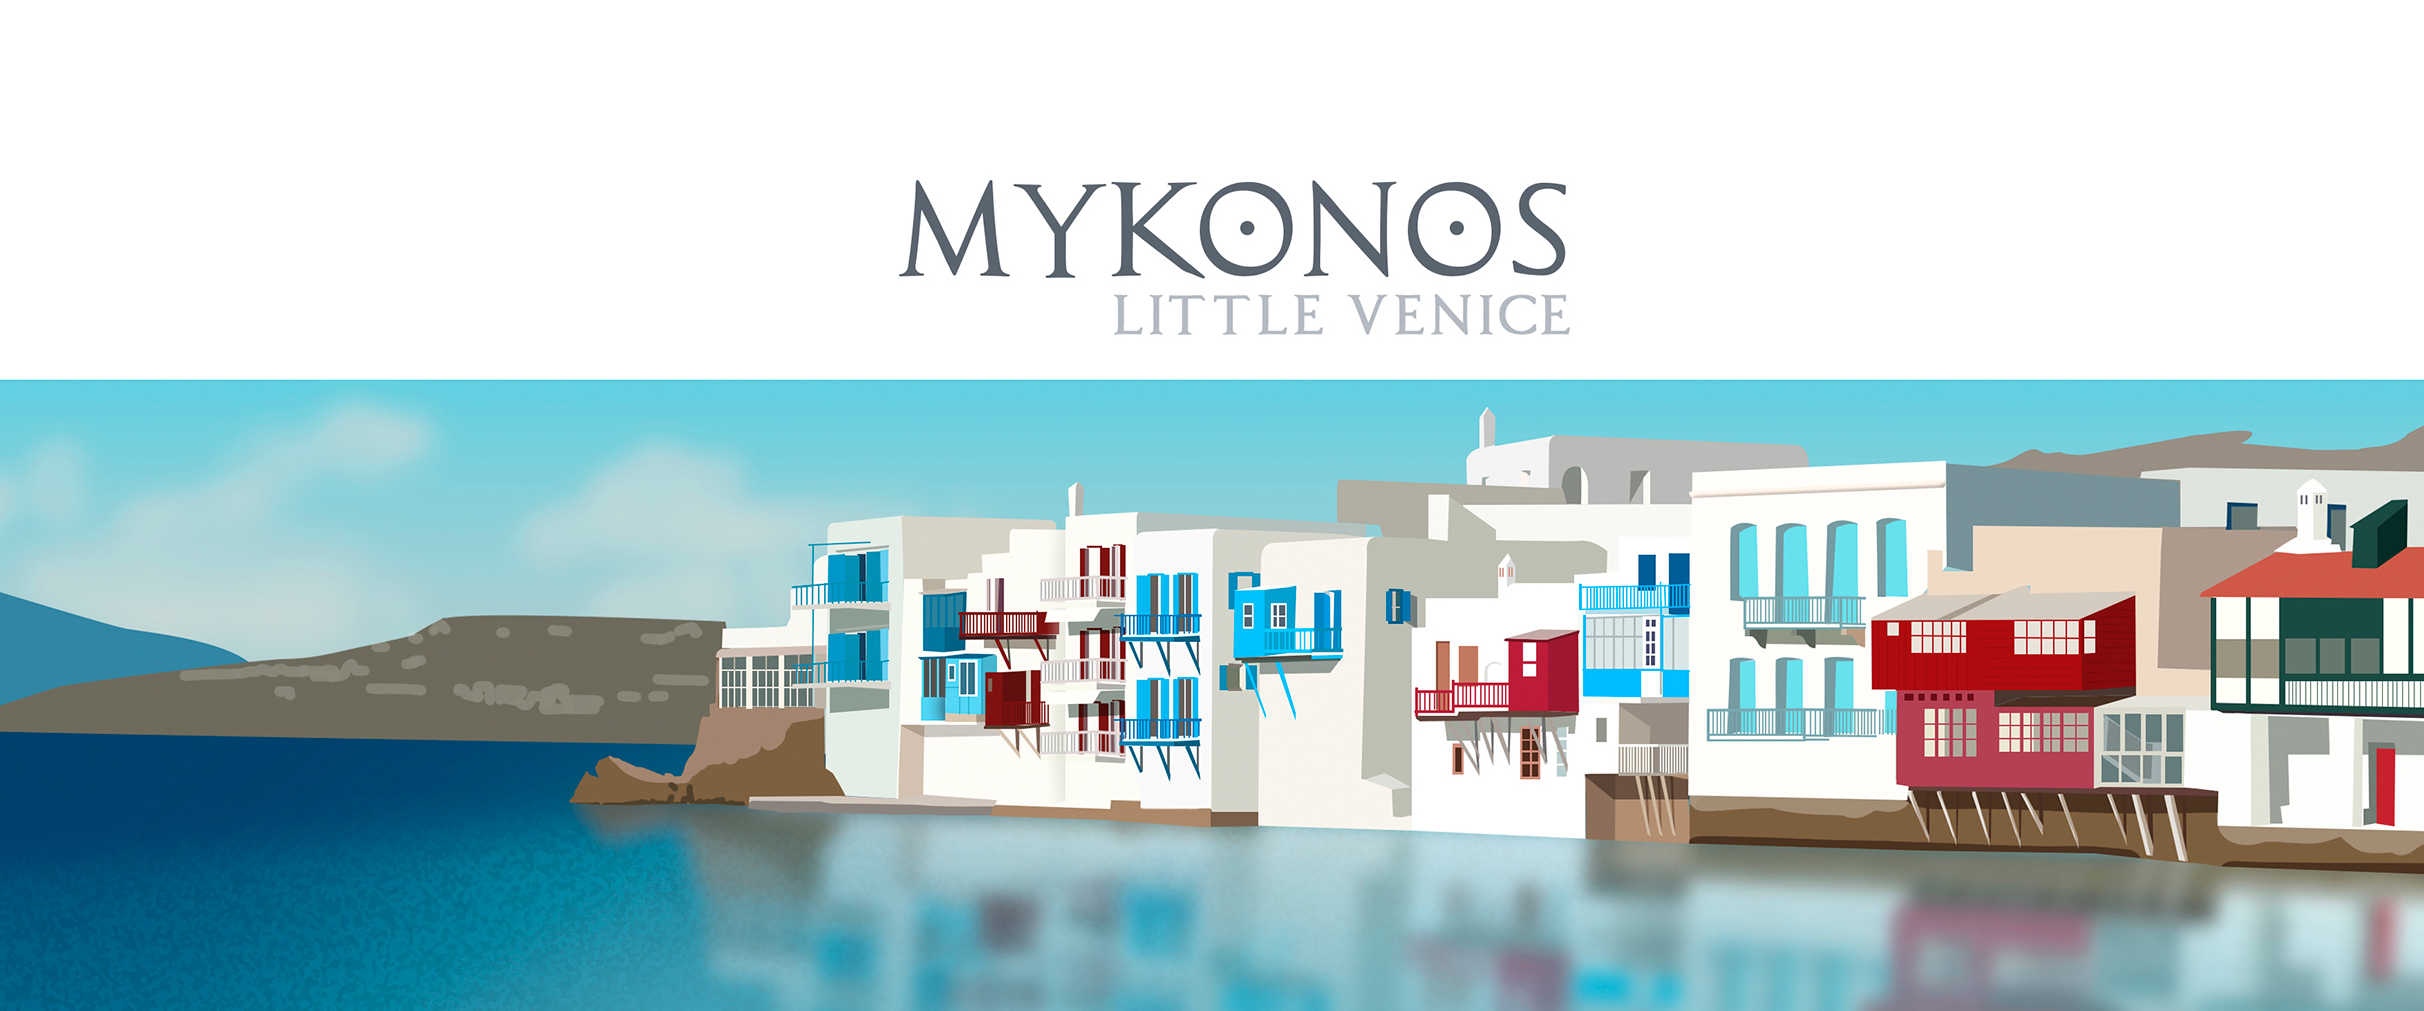 mykonos island